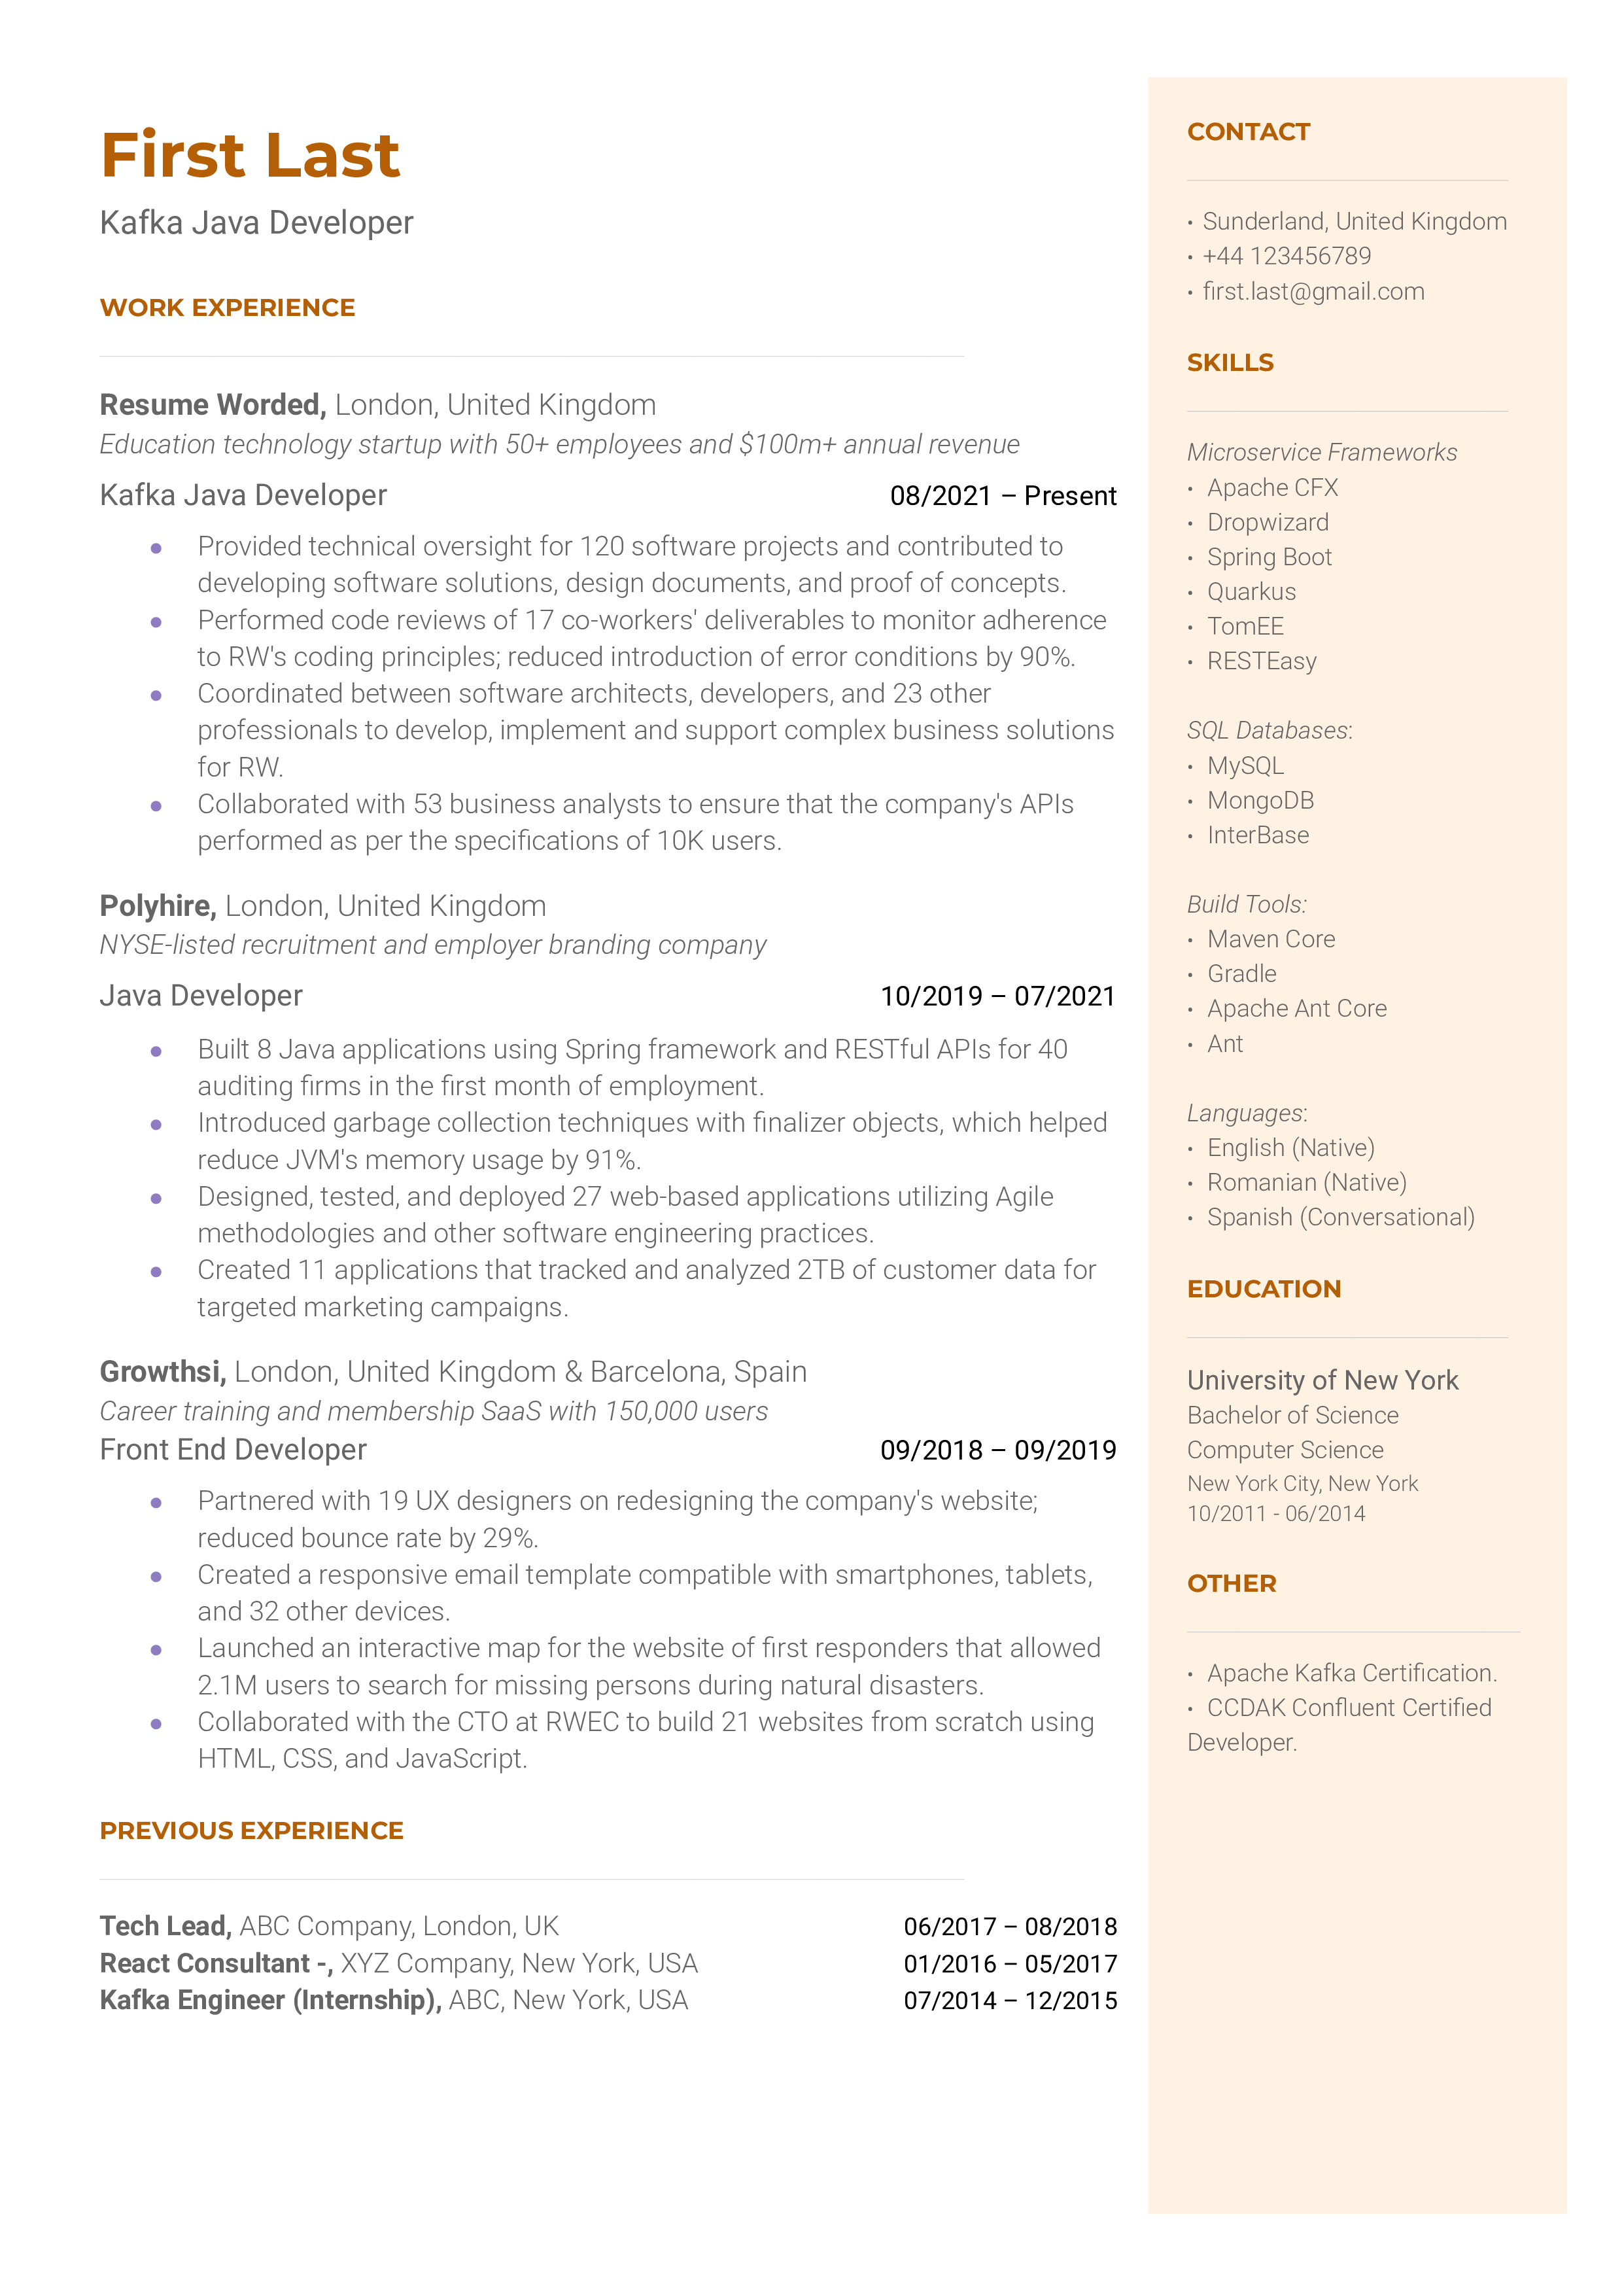 Kafka Java Developer Resume Sample